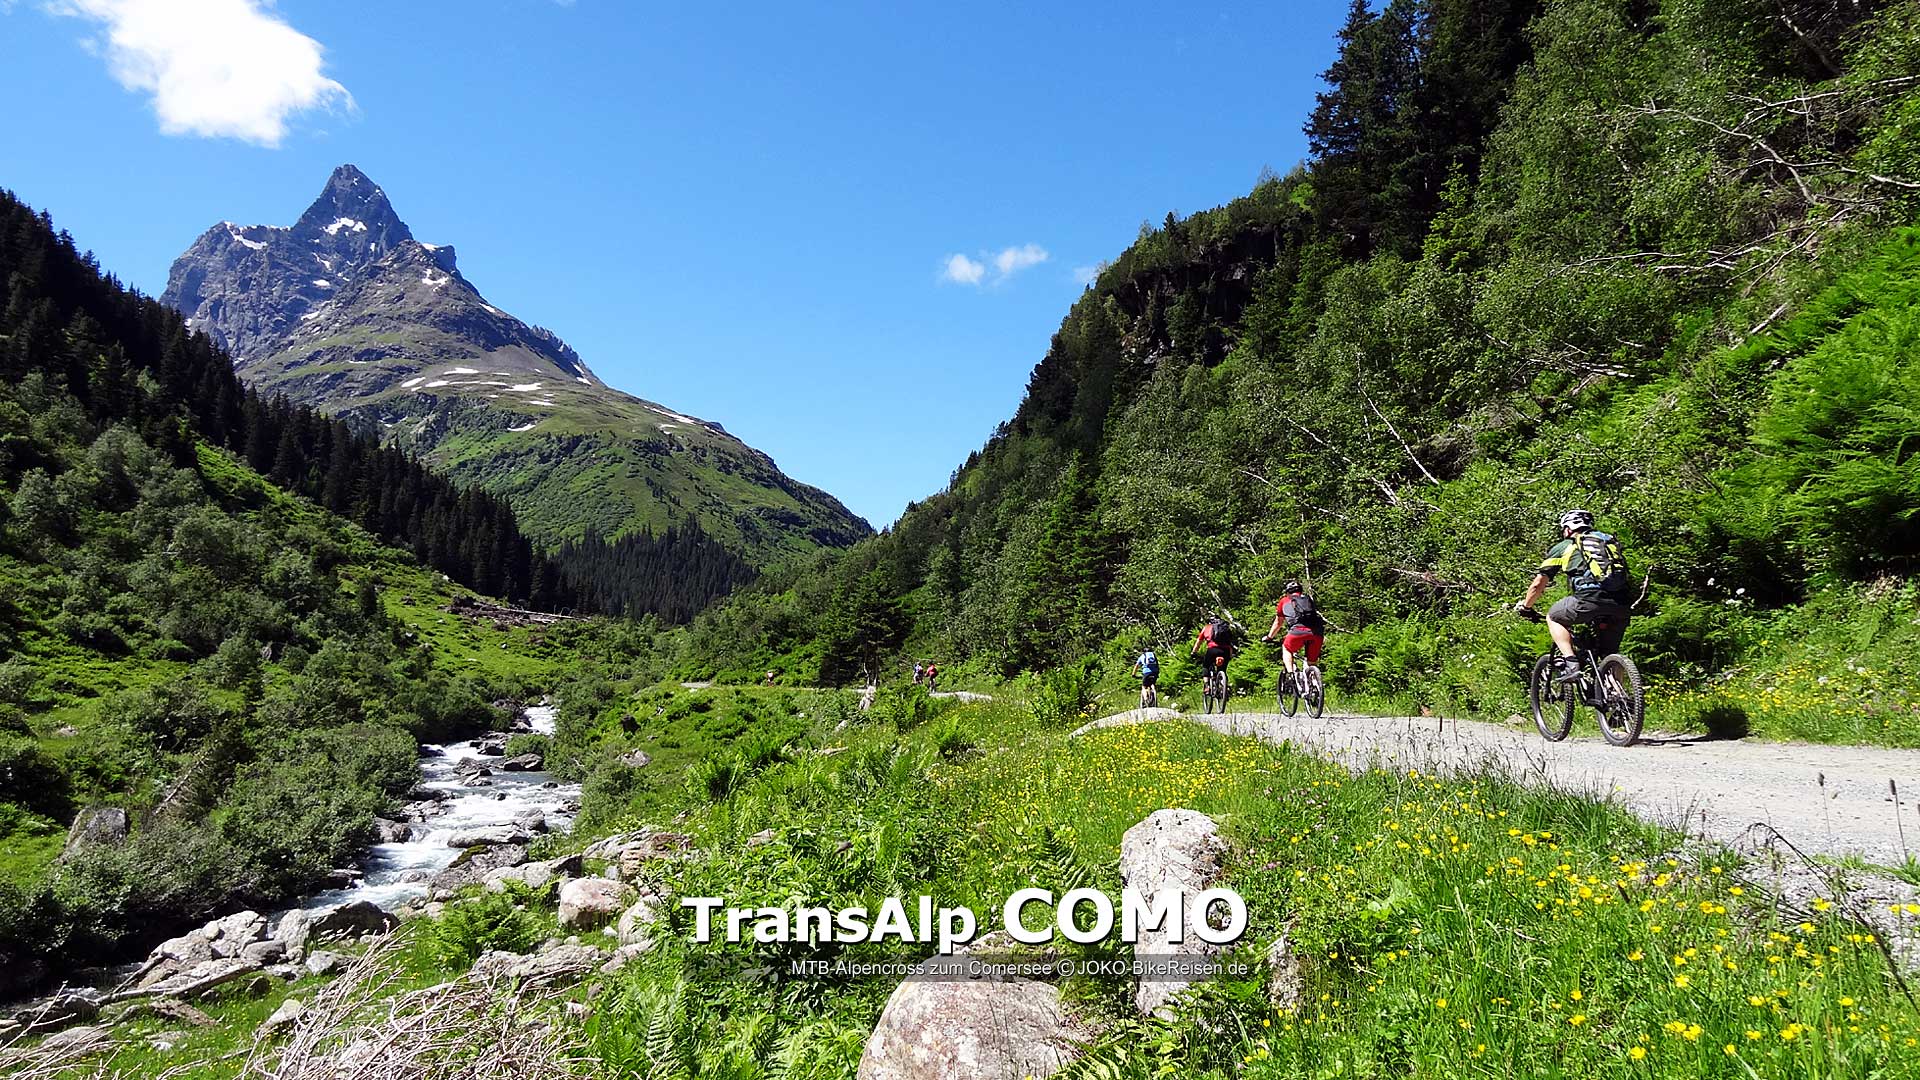 MTB-Flowtrail Alpencross zum Comer See COMO